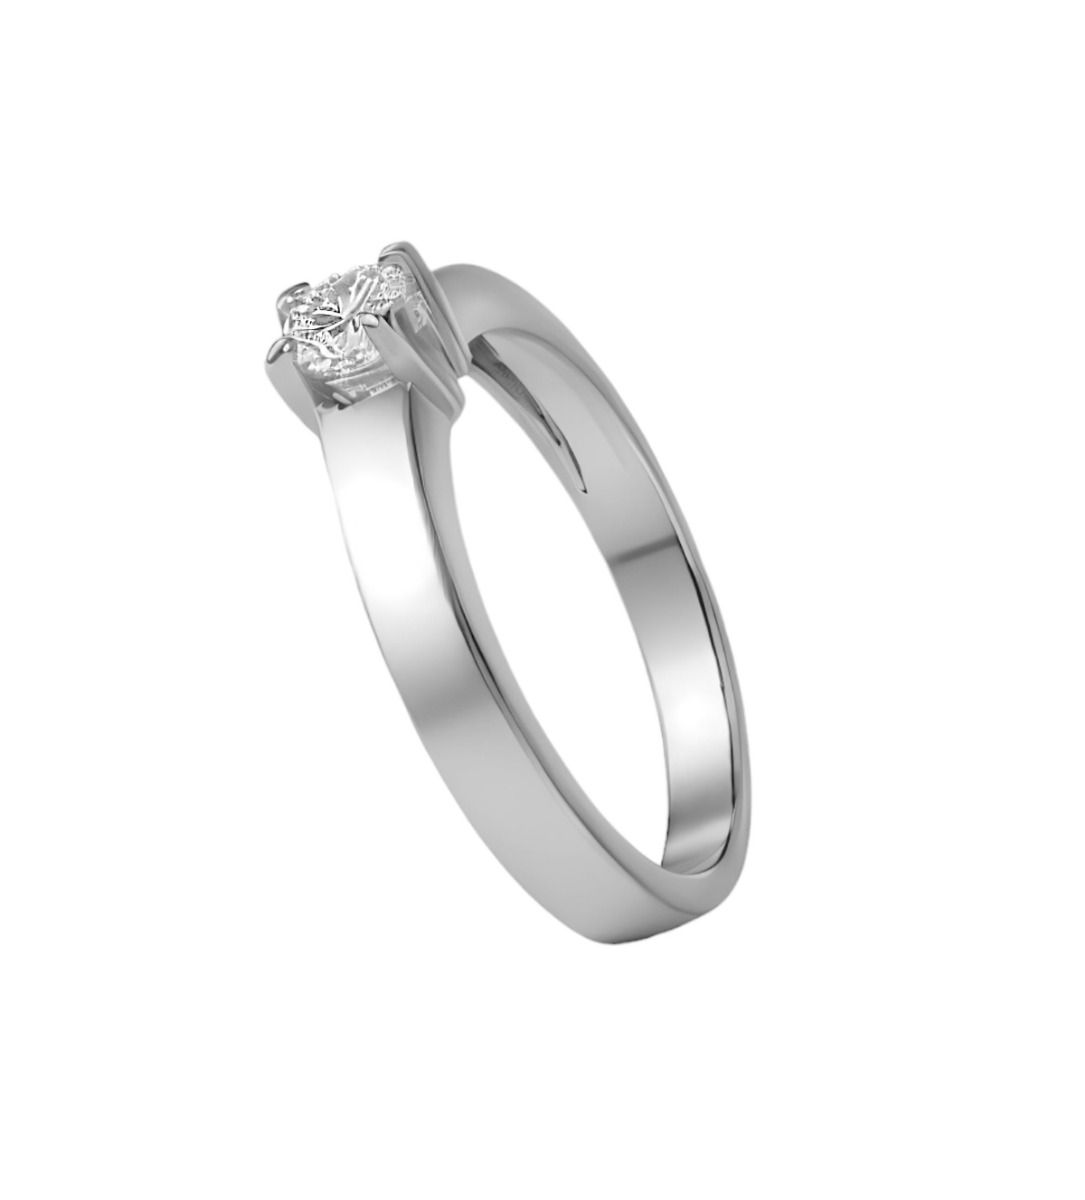 anillo compromiso oro blanco 18 kilates con diamante talla brillante o,25 quilates fotografia para web el rubi joyeros tomo lateral